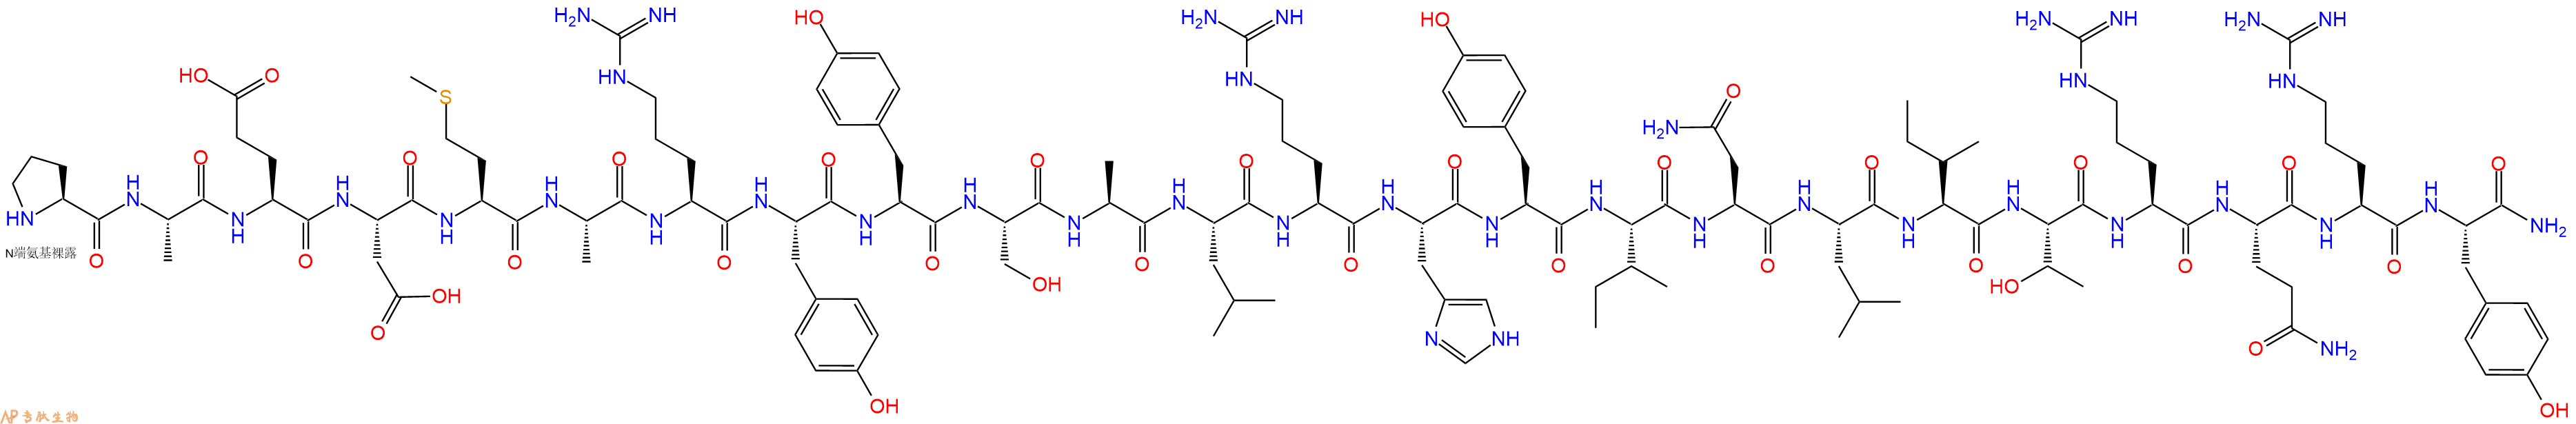 专肽生物产品神经肽YNeuro Peptide Y(13-36), amide, human122341-40-6